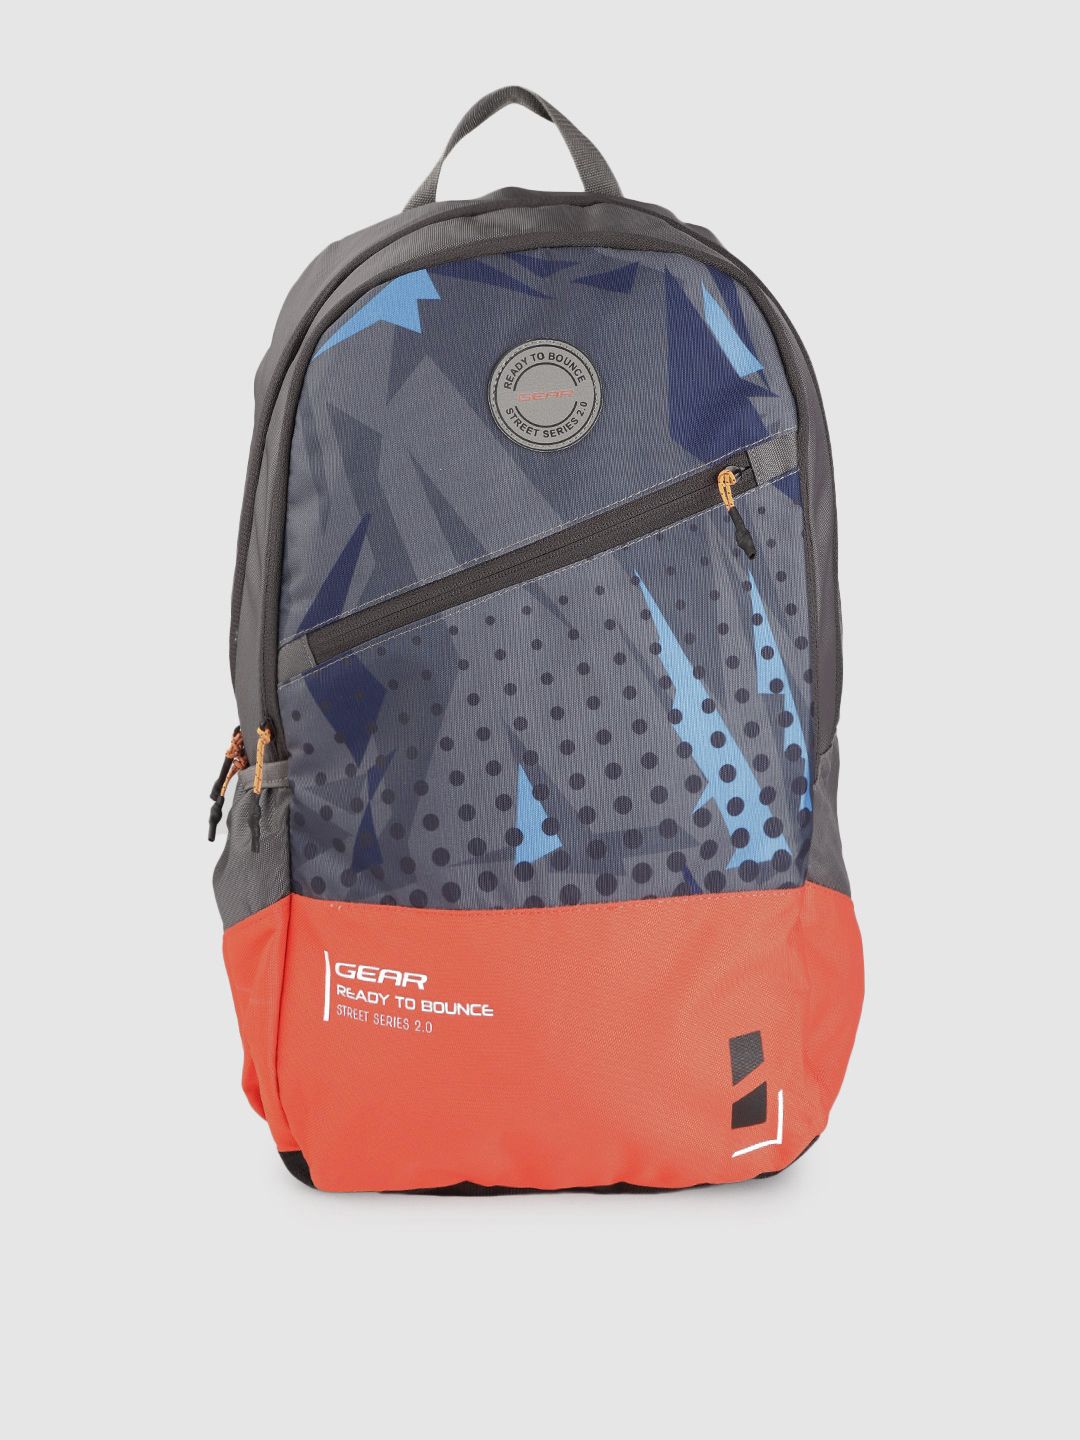 Gear Unisex Grey & Orange Geometric Print 16 Inch Laptop Backpack Price in India